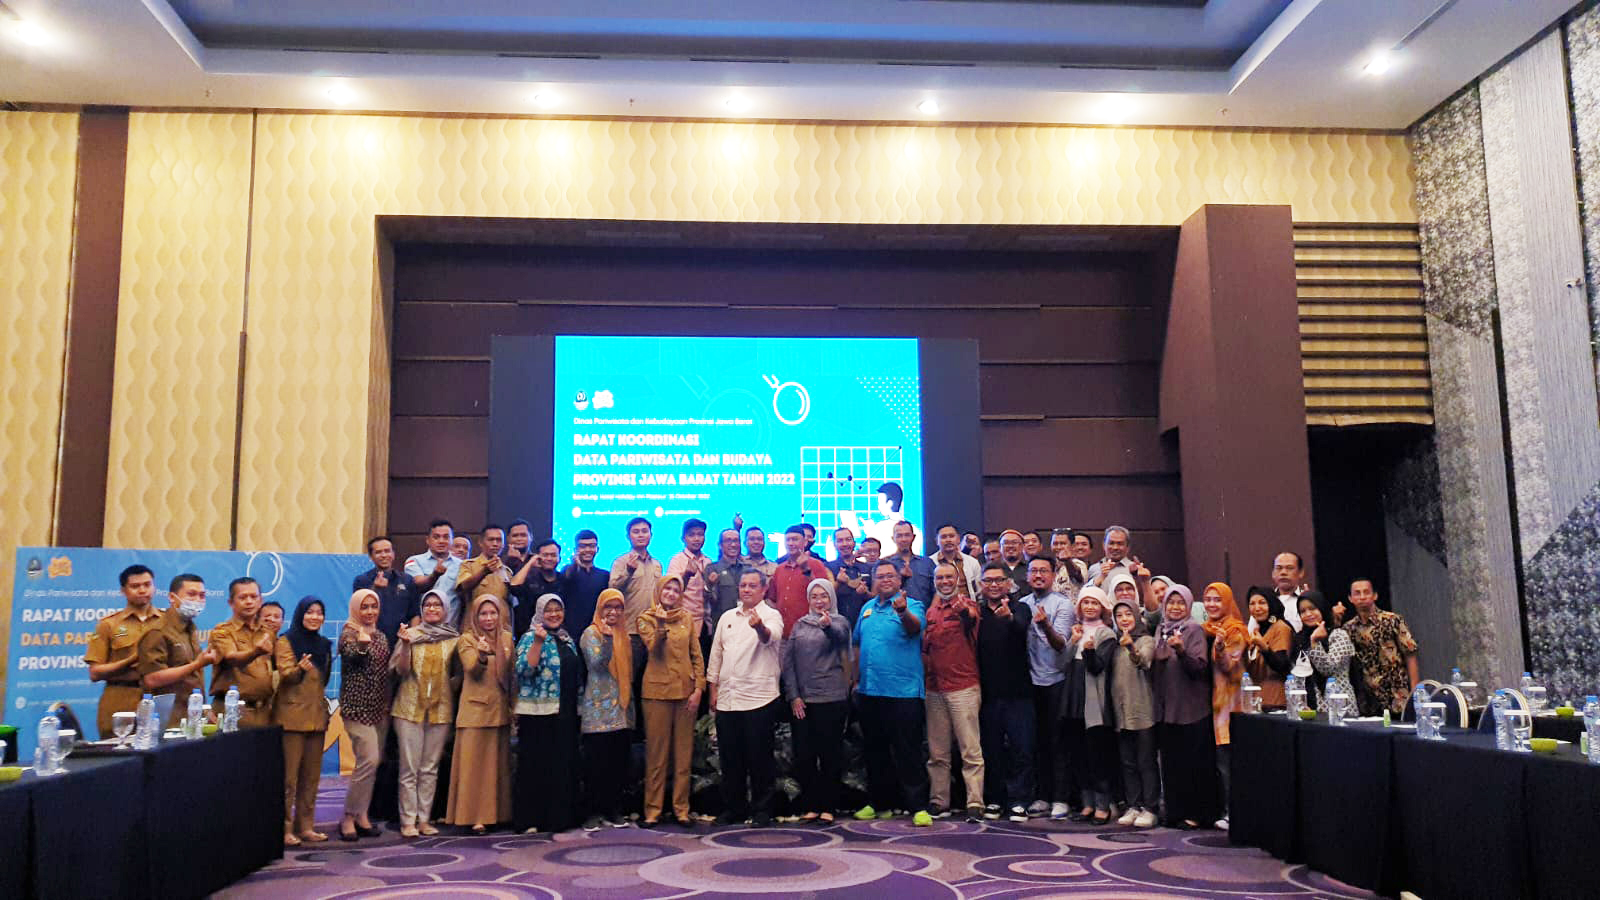 Perkuat Kelengkapan Data, Disparbud Jabar Gelar Rapat Koordinasi Data Pariwisata dan Budaya Jawa Barat Tahun 2022